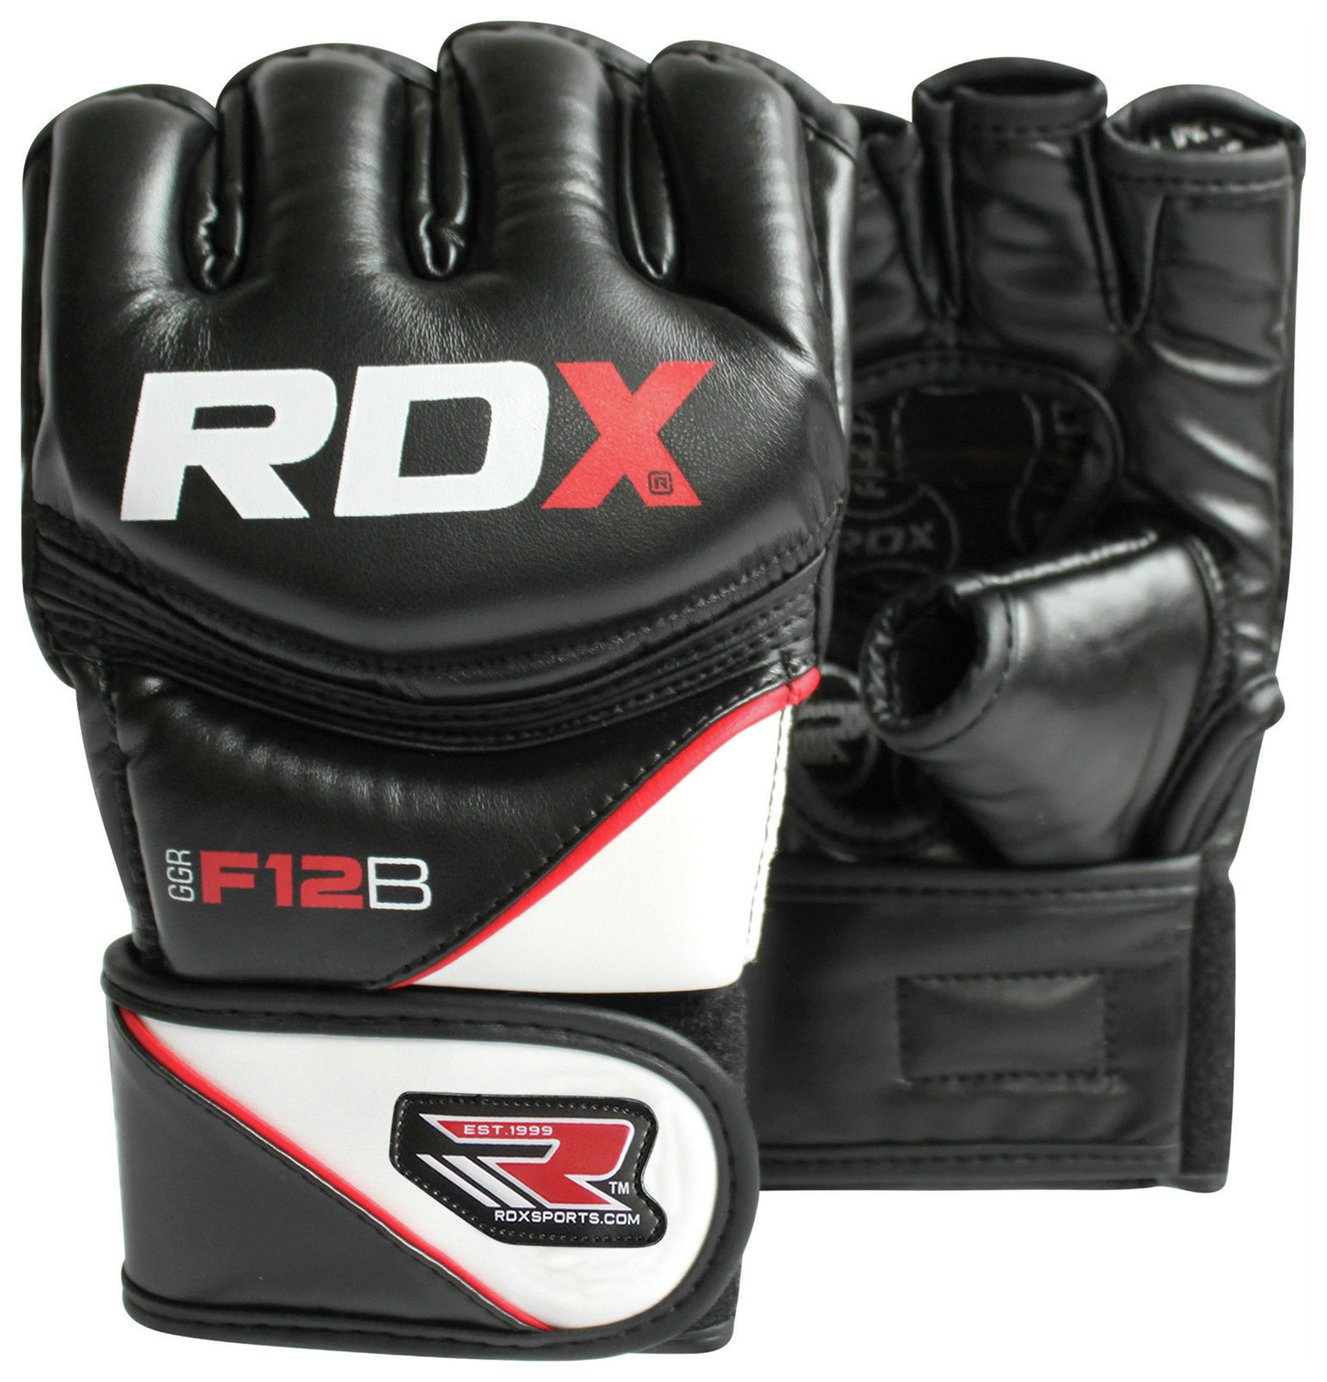 RDX Synthetic Leather MMA Gloves Black - Large/Extra Large